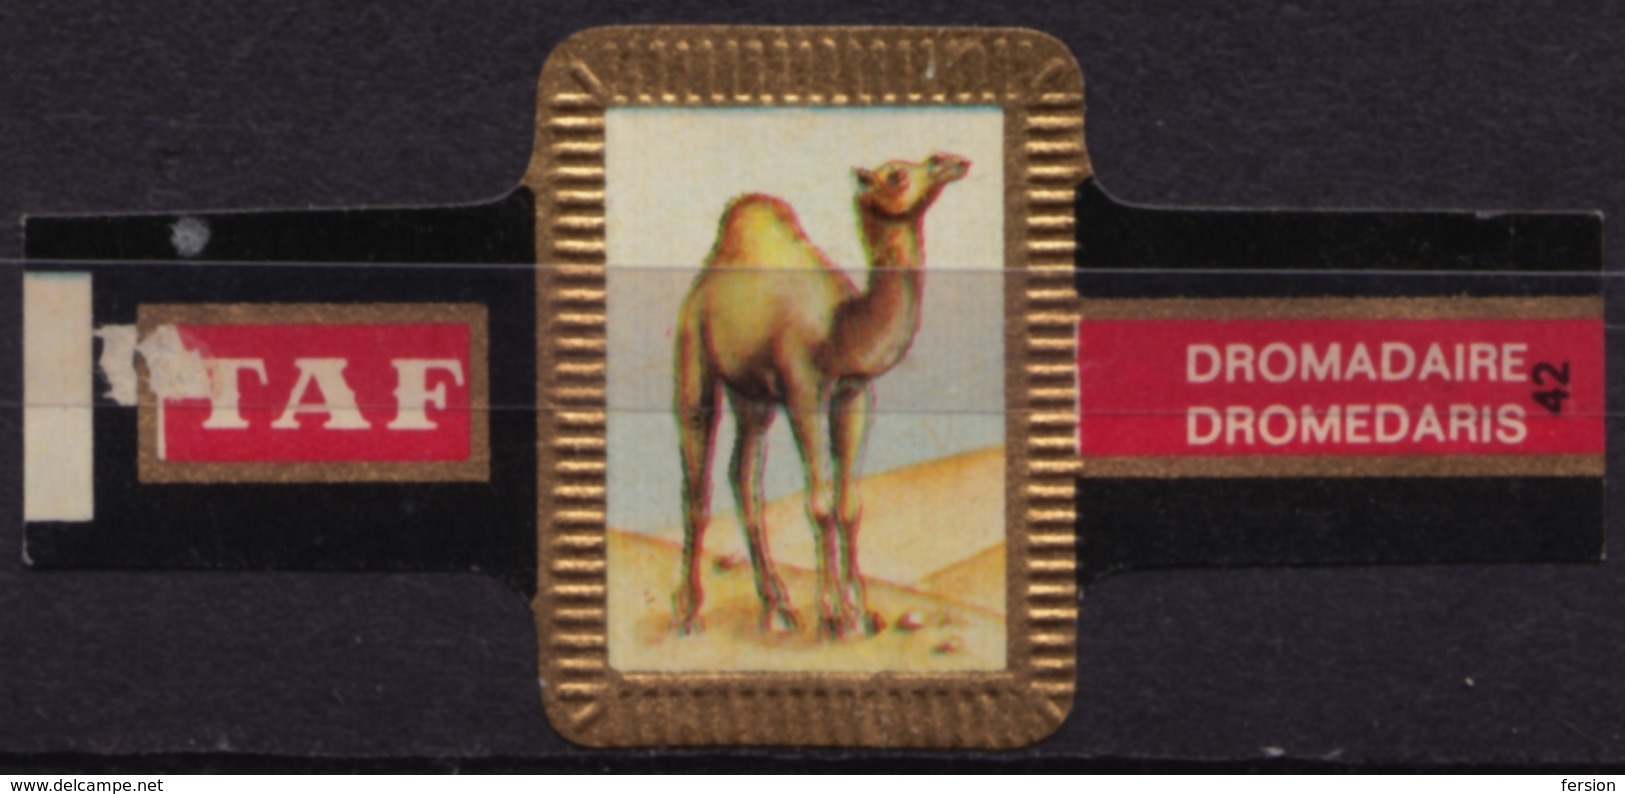 Dromadaire Dromedar Camel  - Animal Mammals - Belgium Belgique - TAF - CIGAR CIGARS Label Vignette - Etiketten